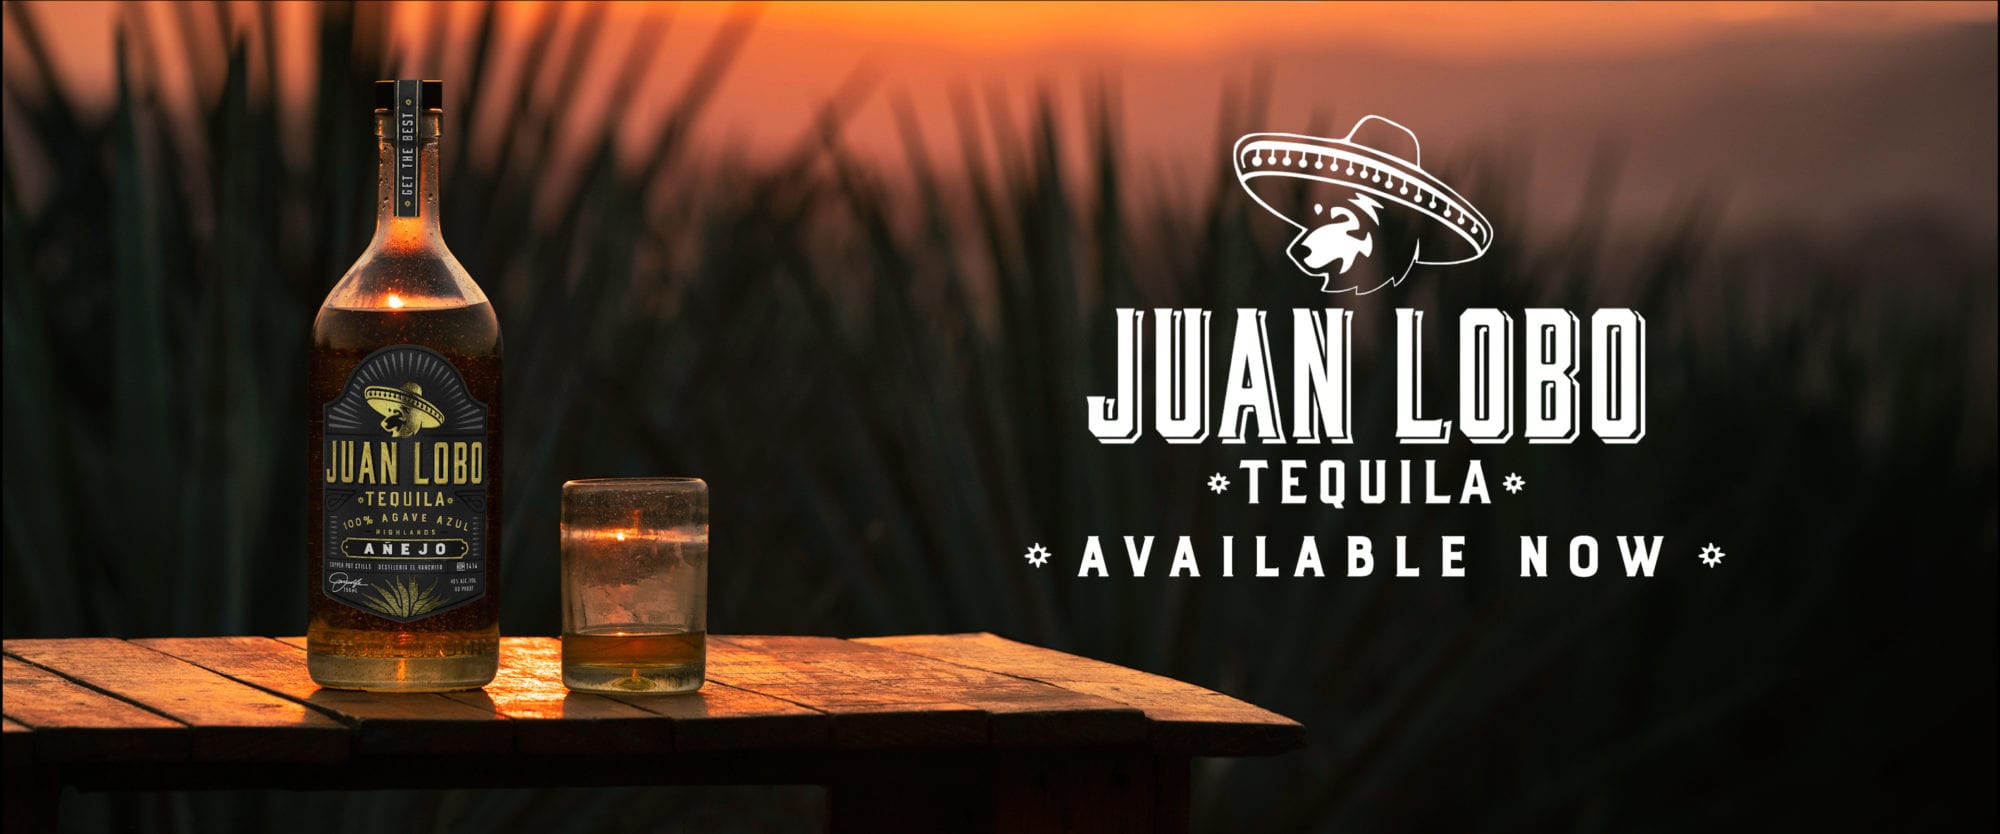 National Recording Artist, Jon Wolfe Launches Juan Lobo Tequila Short Film ...